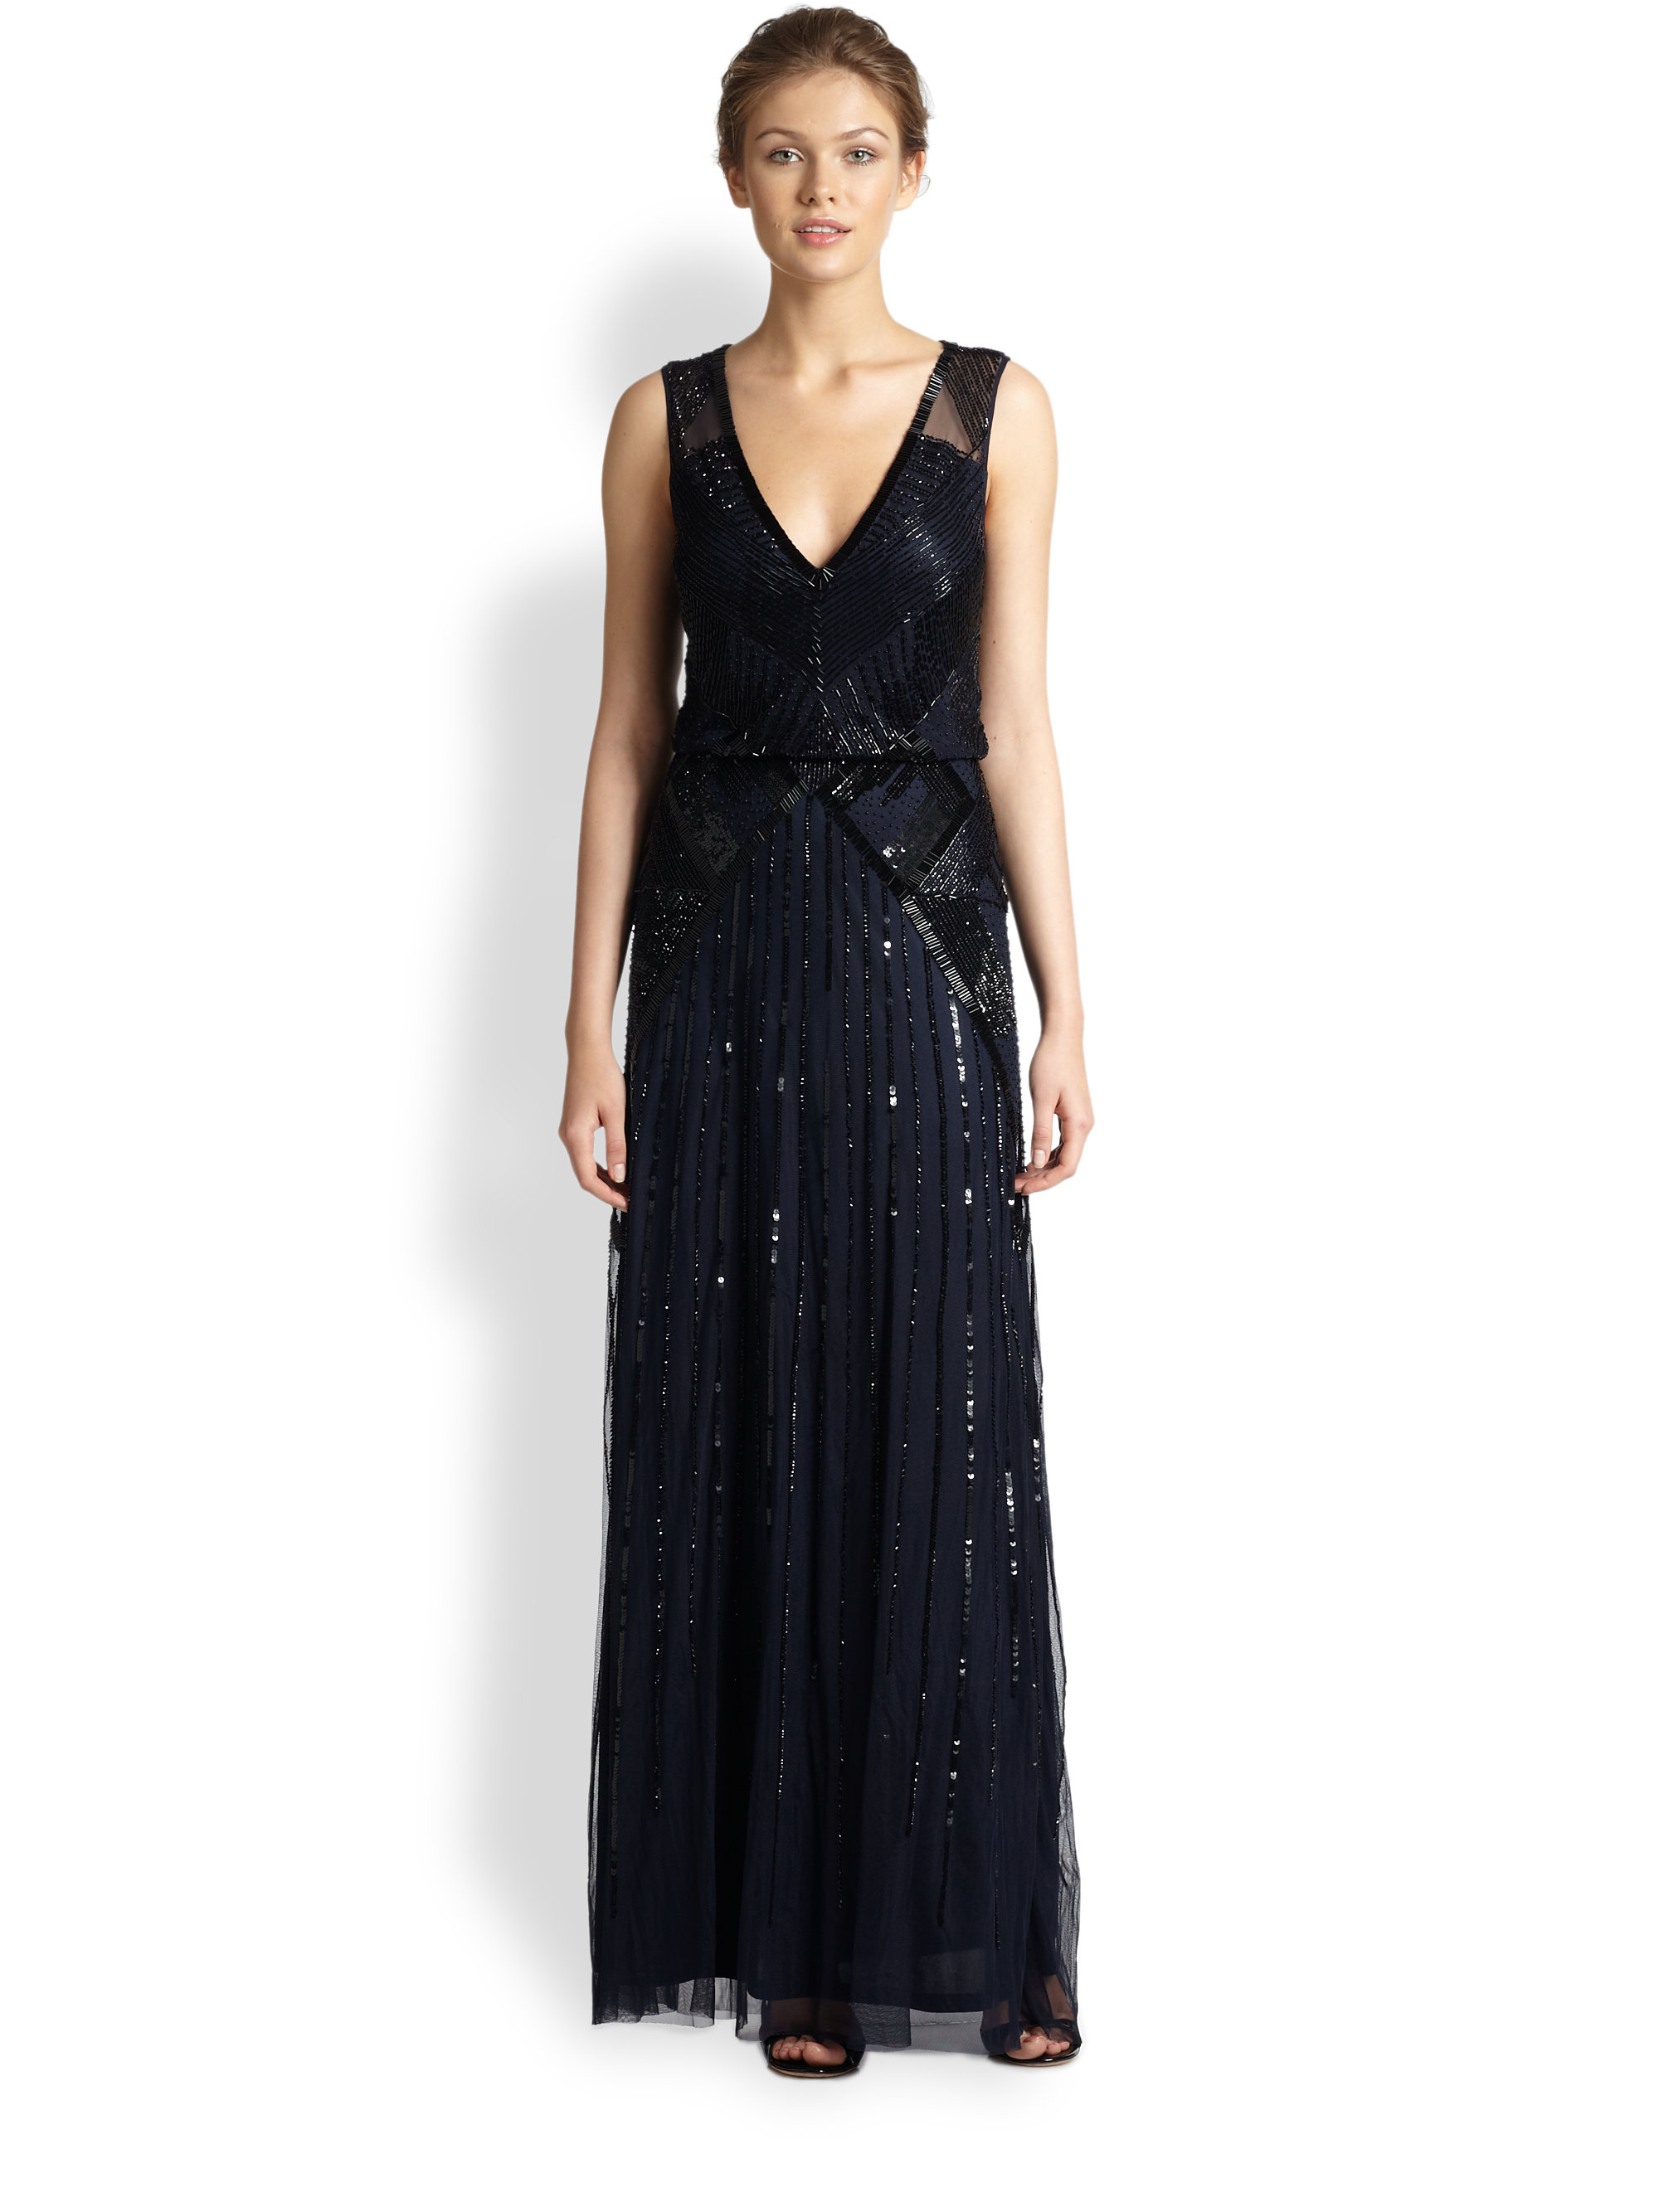 Lyst - Aidan Mattox Boatneck Lace Dress in Black